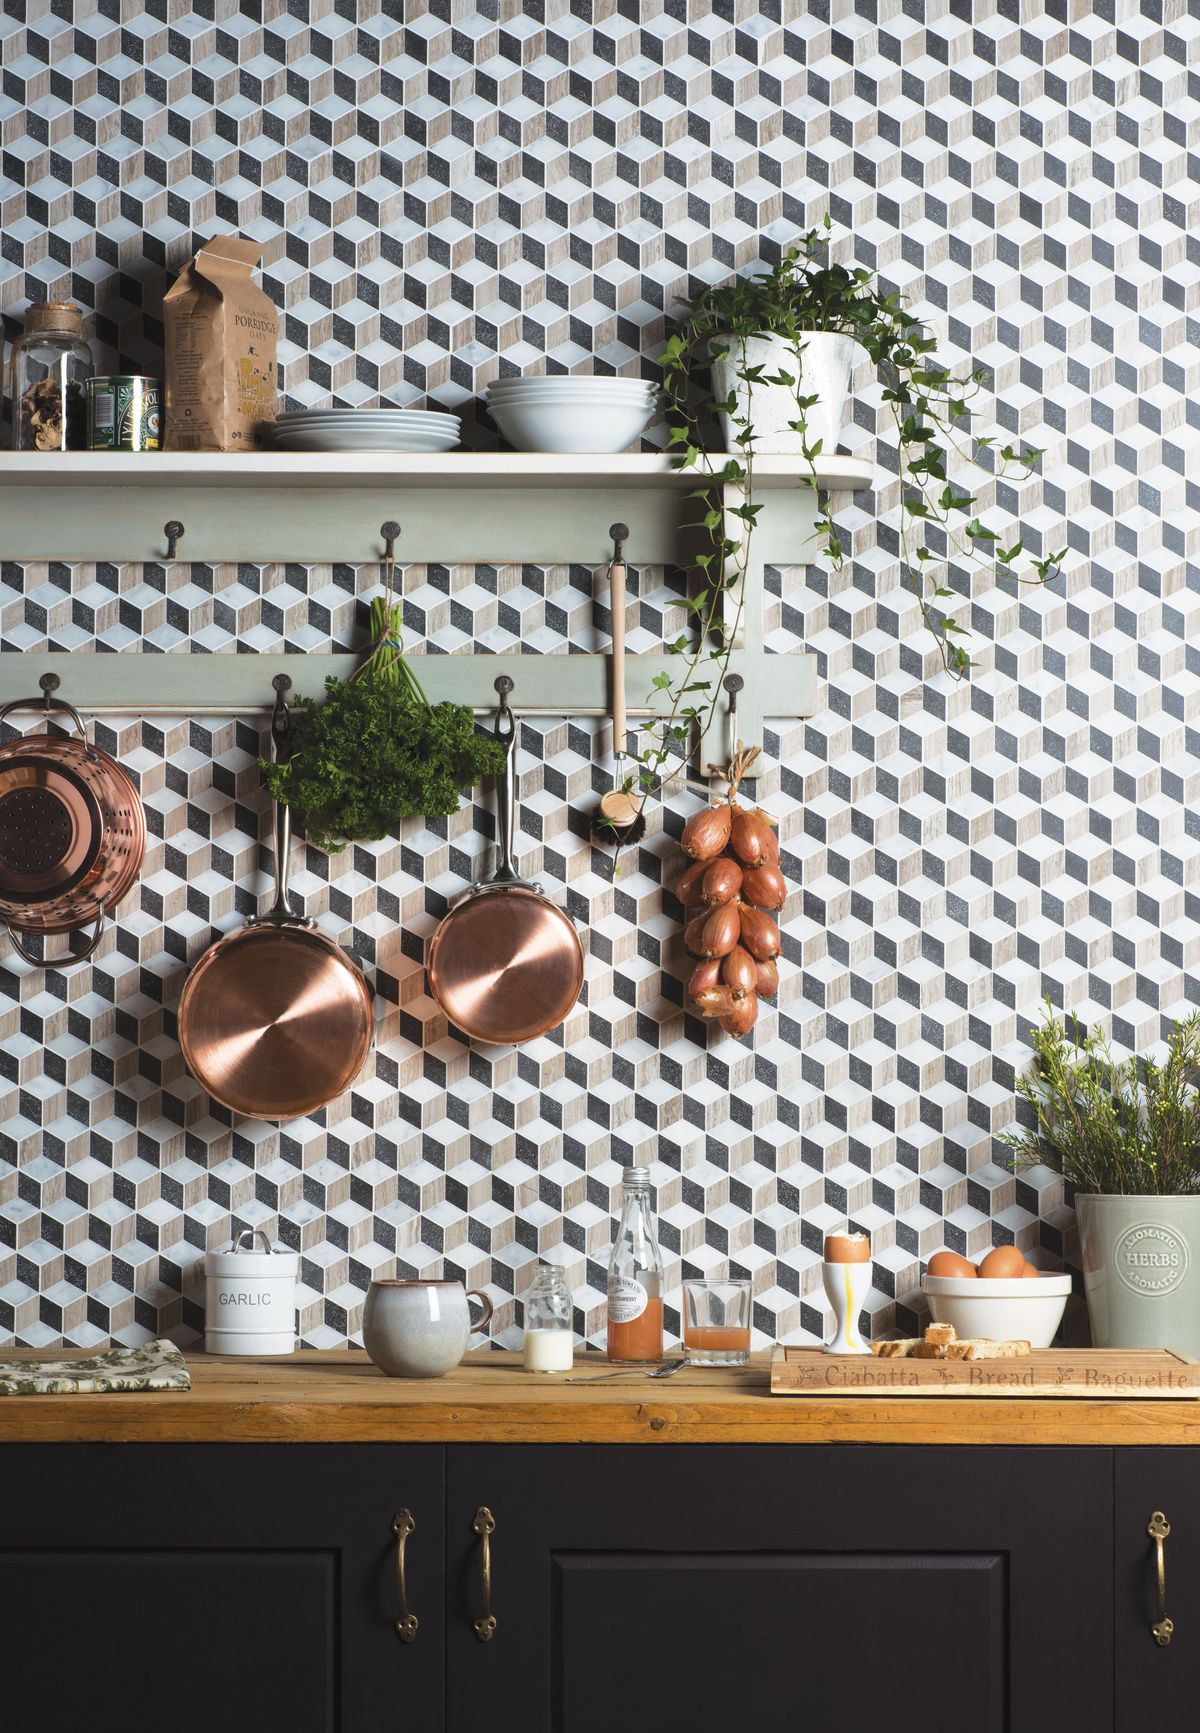 16 Small Kitchen Tile Ideas Styles, What Size Subway Tile For Small Kitchen Backsplash